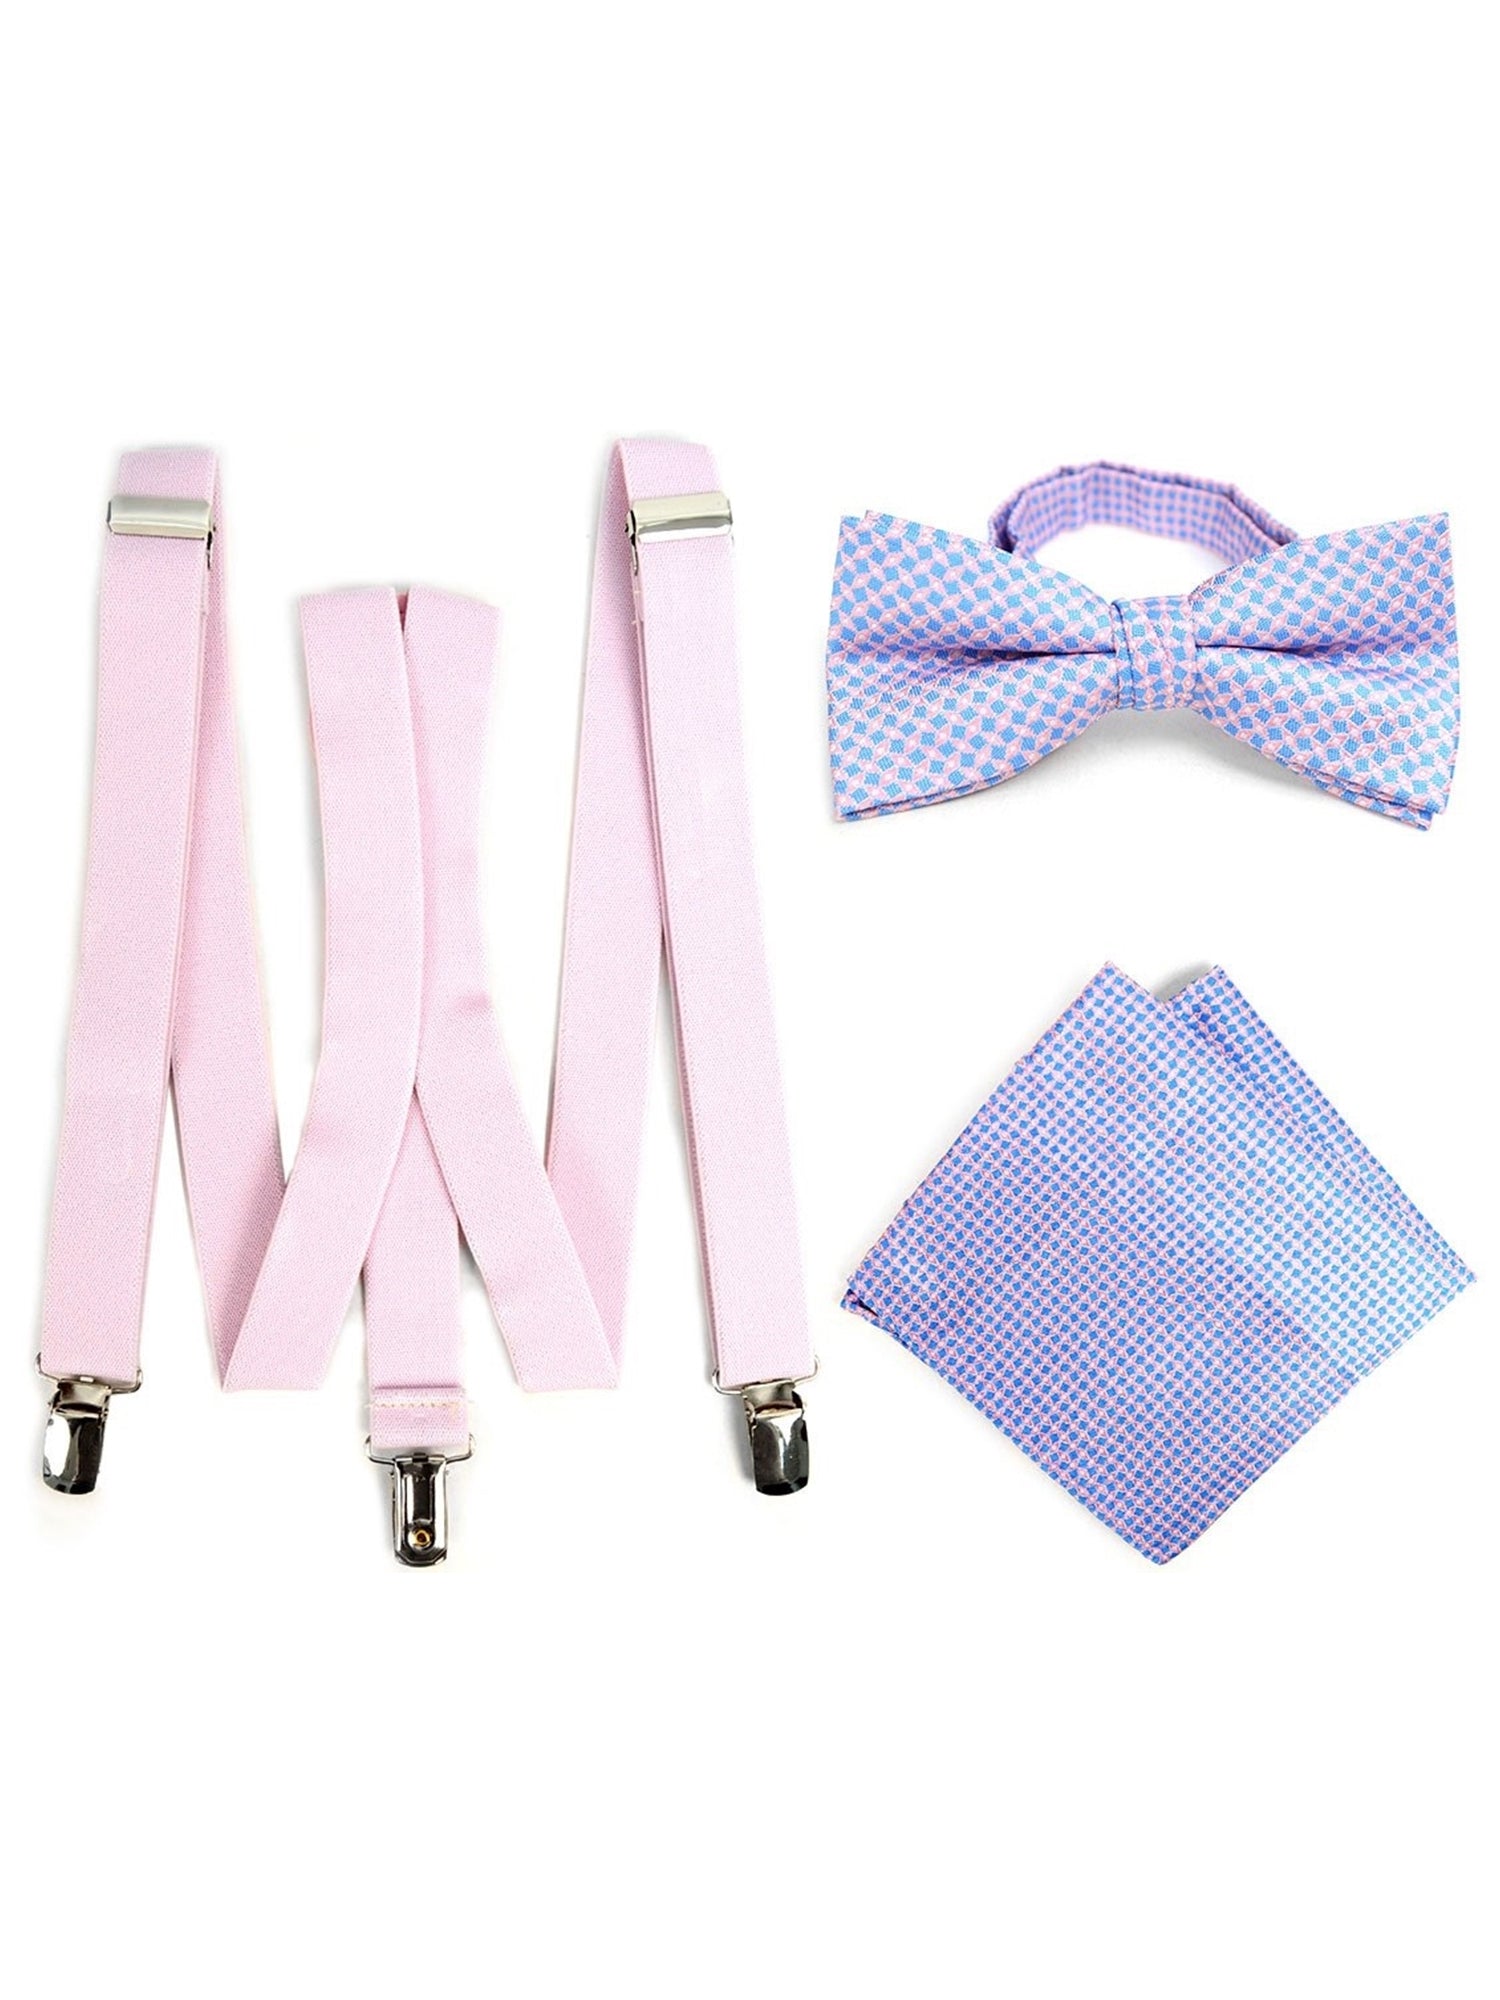 Men's Fuchsia 3 PC Clip-on Suspenders, Bow Tie & Hanky Sets Men's Solid Color Bow Tie TheDapperTie Pink # 2 Regular 